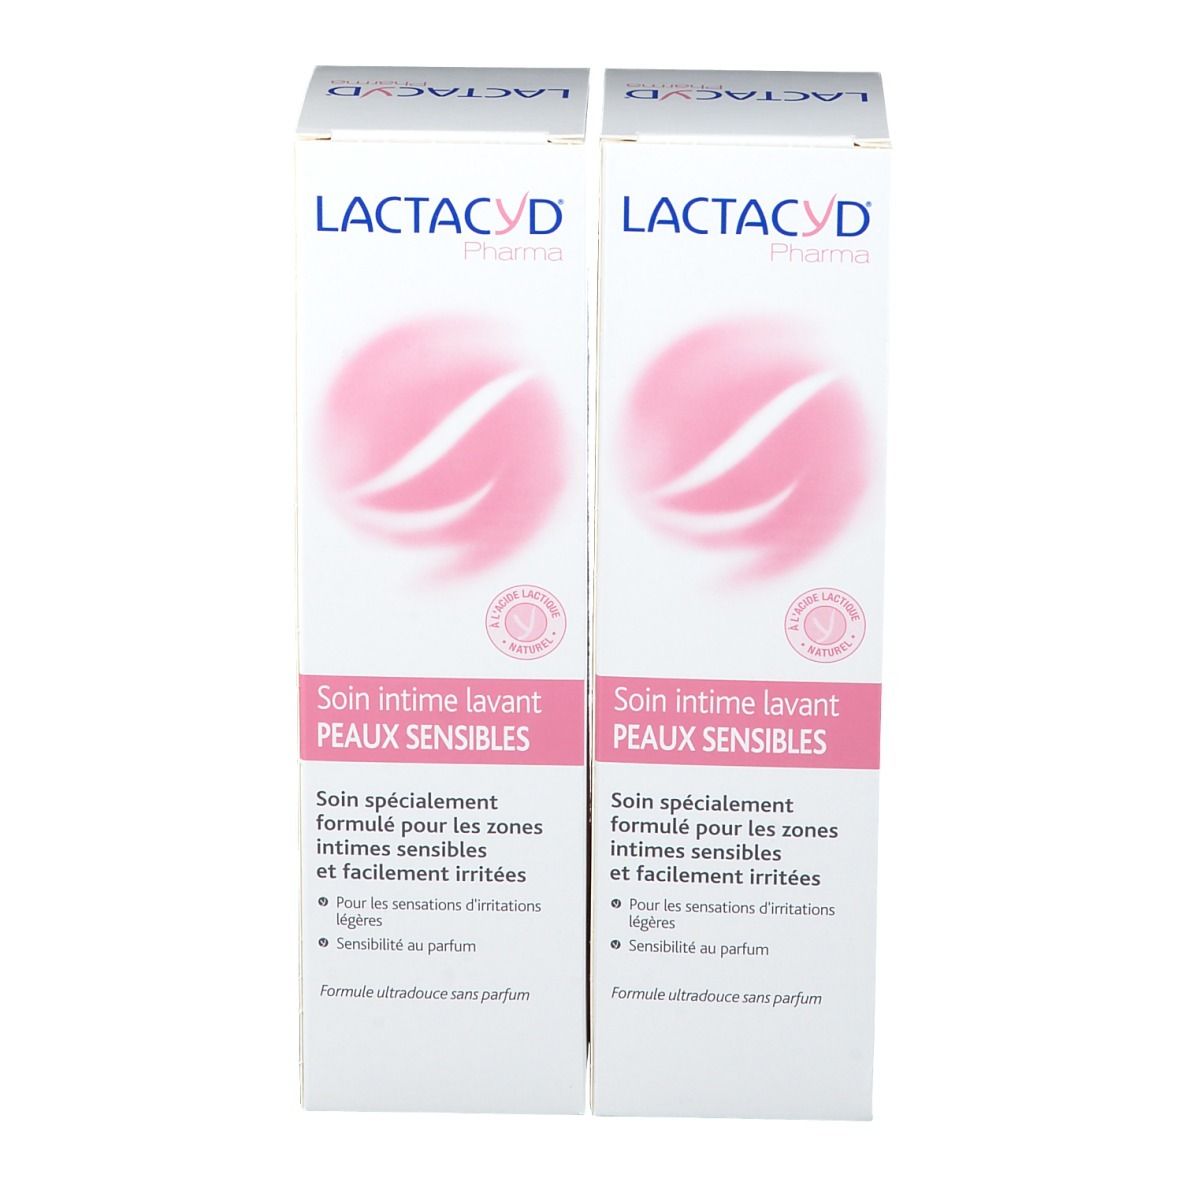 Lactacyd Pharma Peaux Sensibles